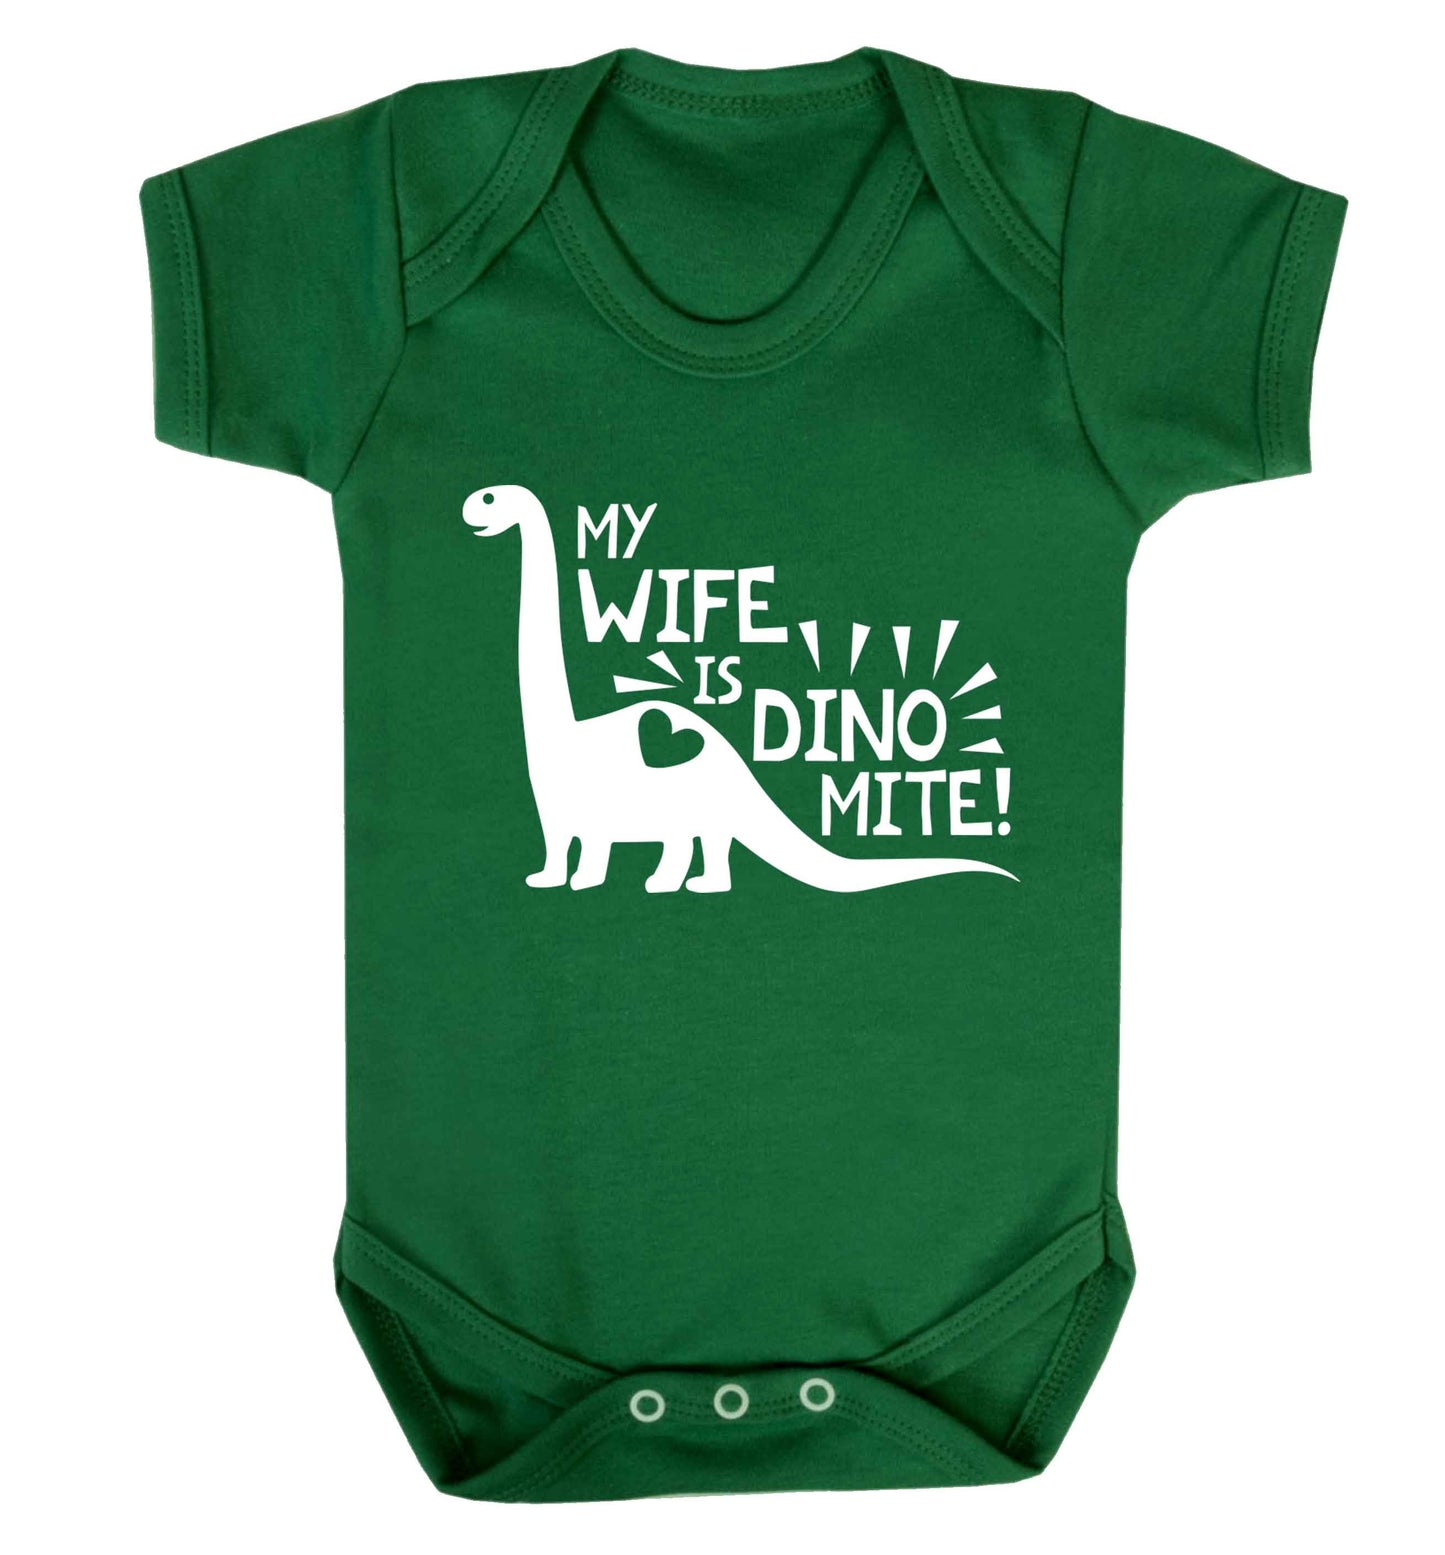 My wife is dinomite! Baby Vest green 18-24 months